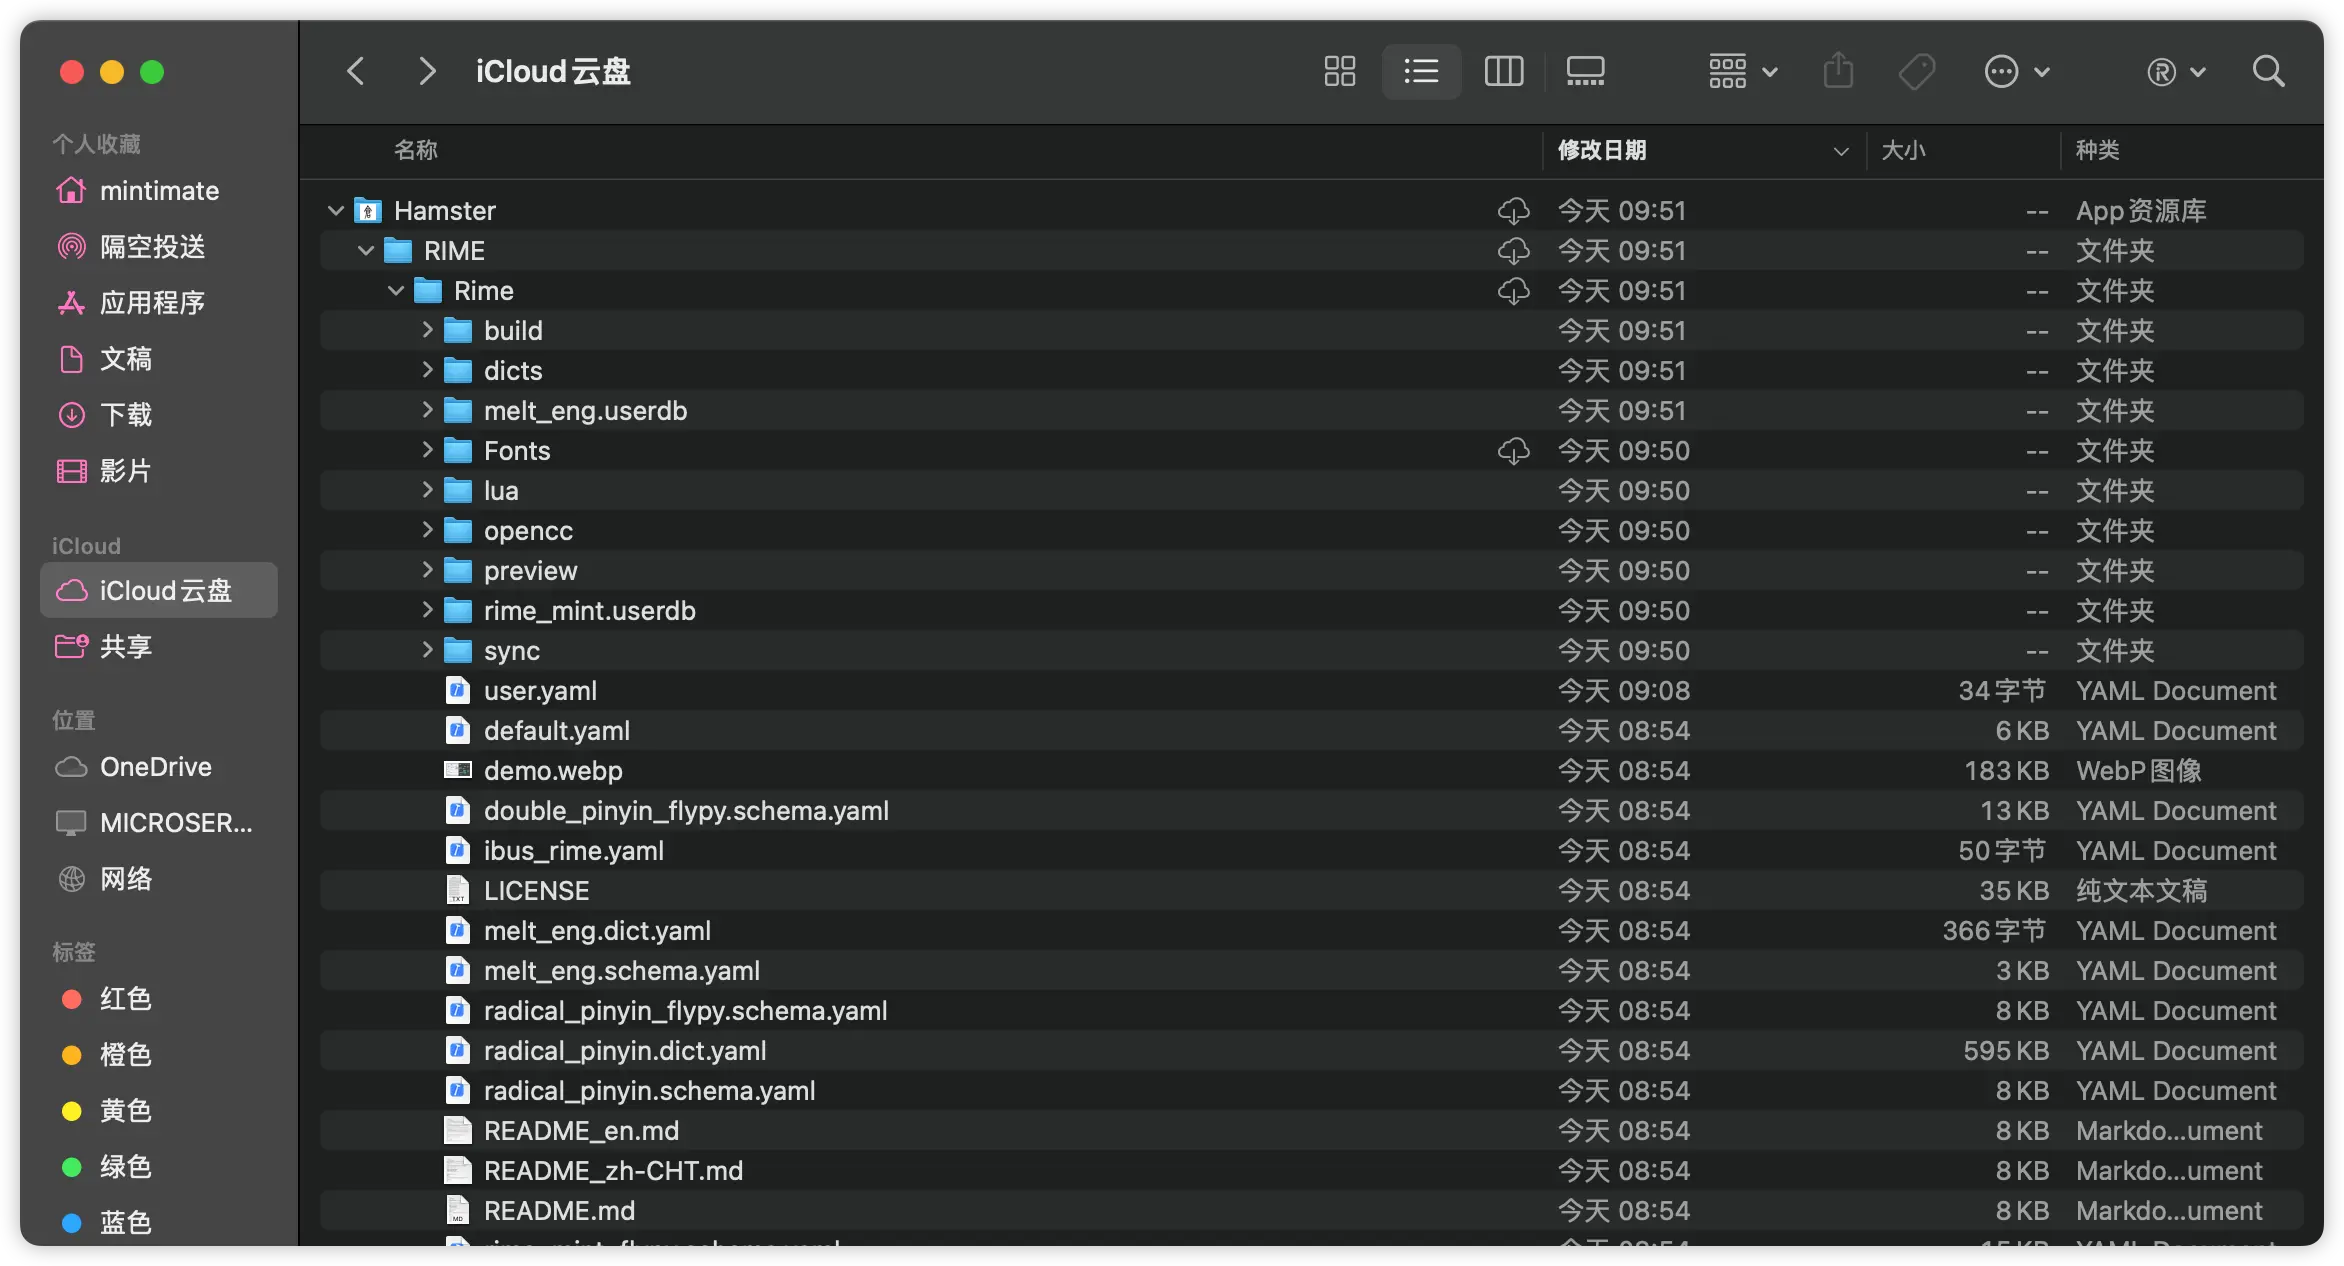 iCloud sync folder